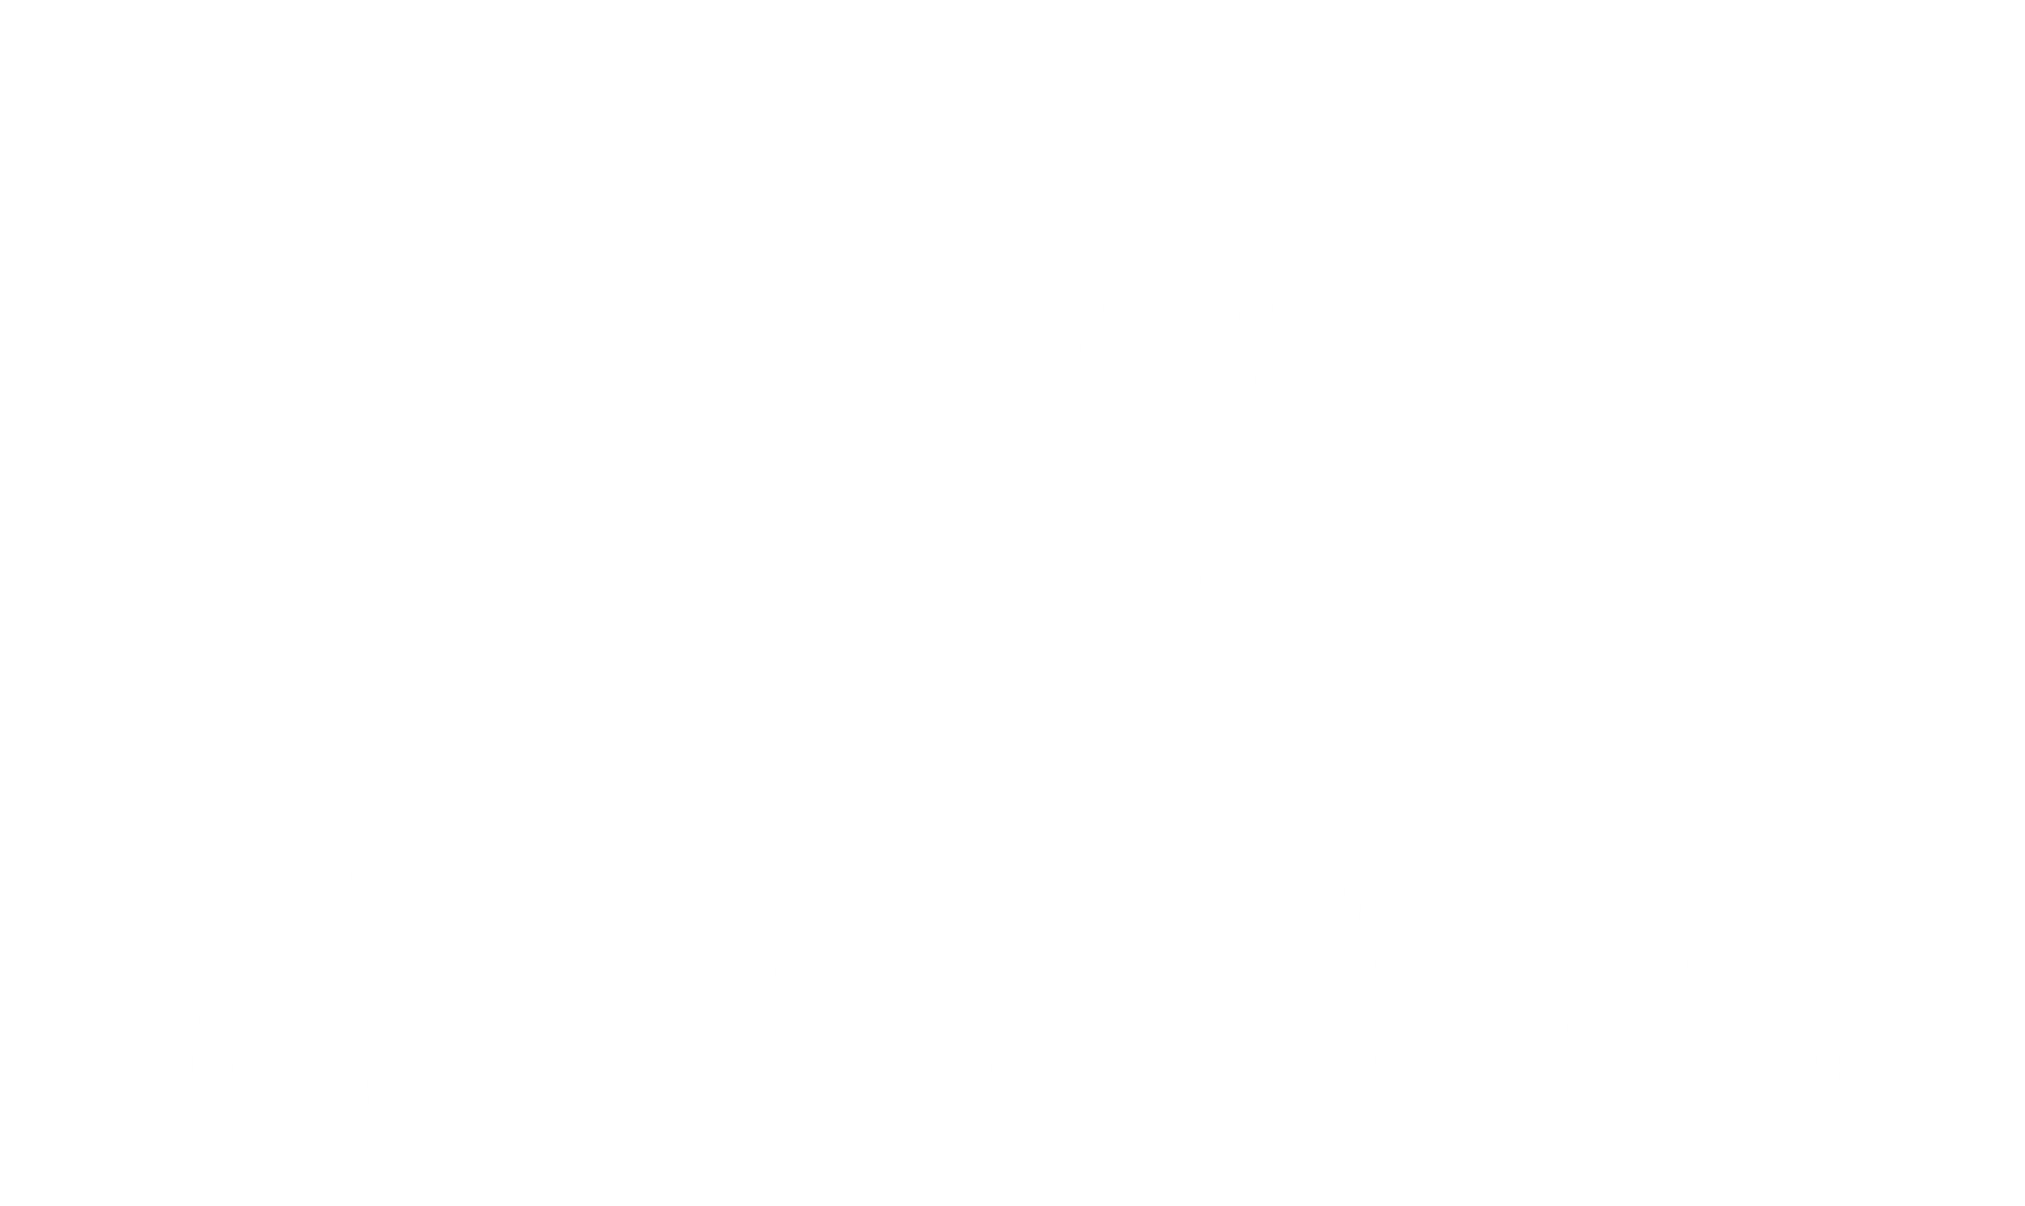 Place to bun